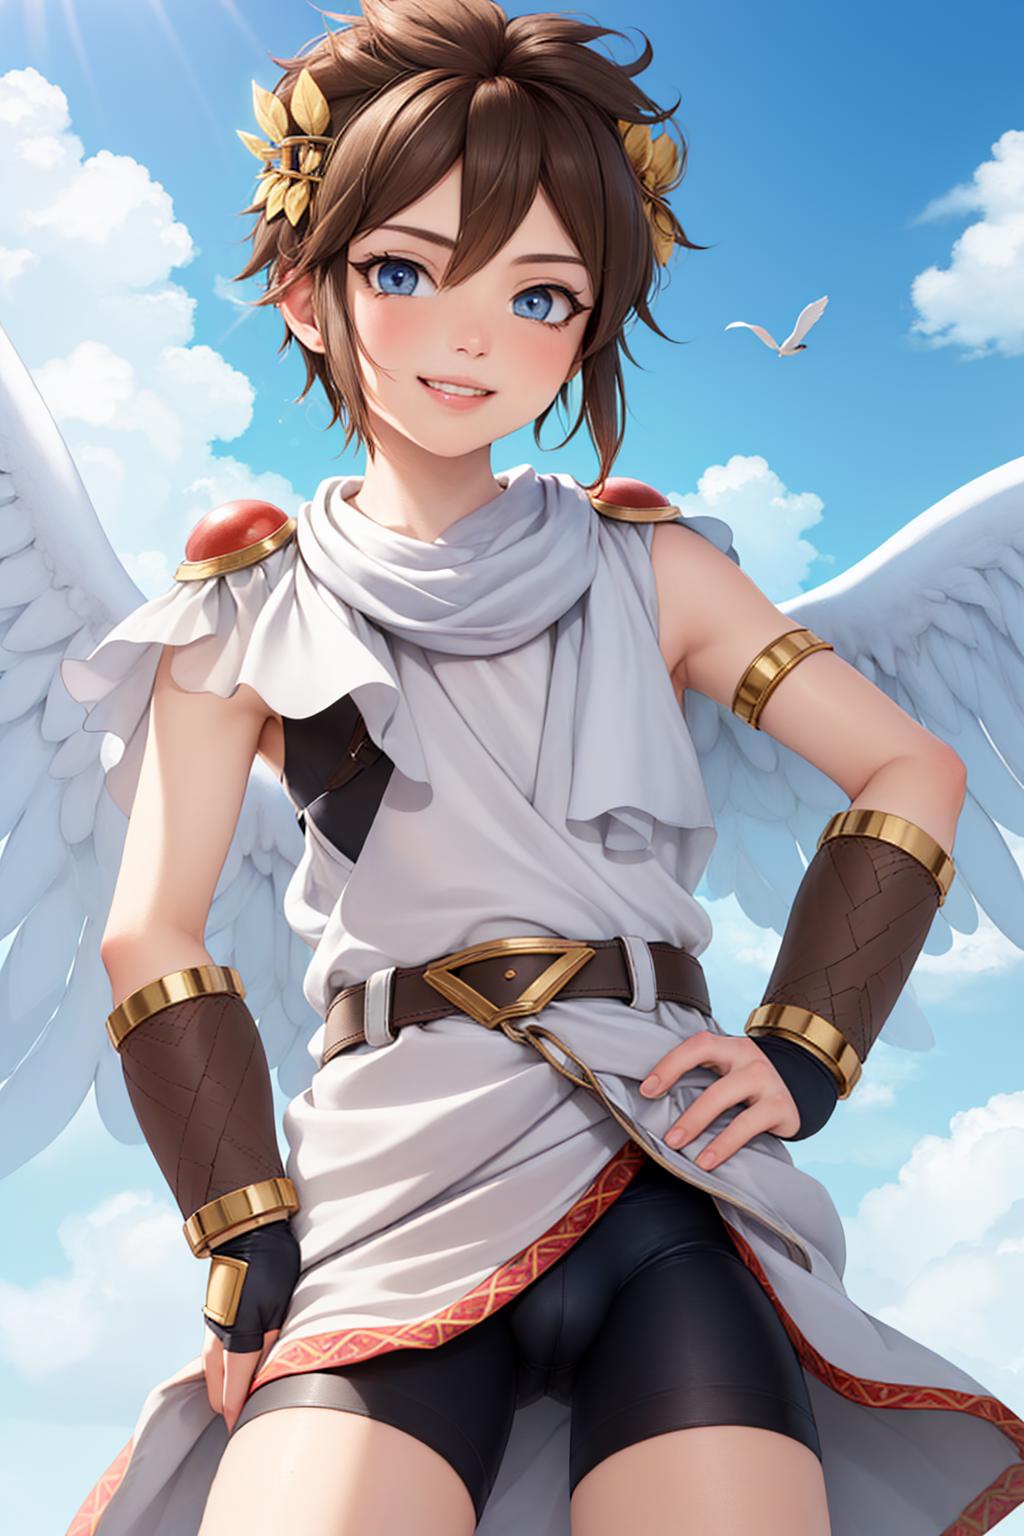 KREA - Anime Key Visual of Palutena from Kid Icarus Uprising, official media